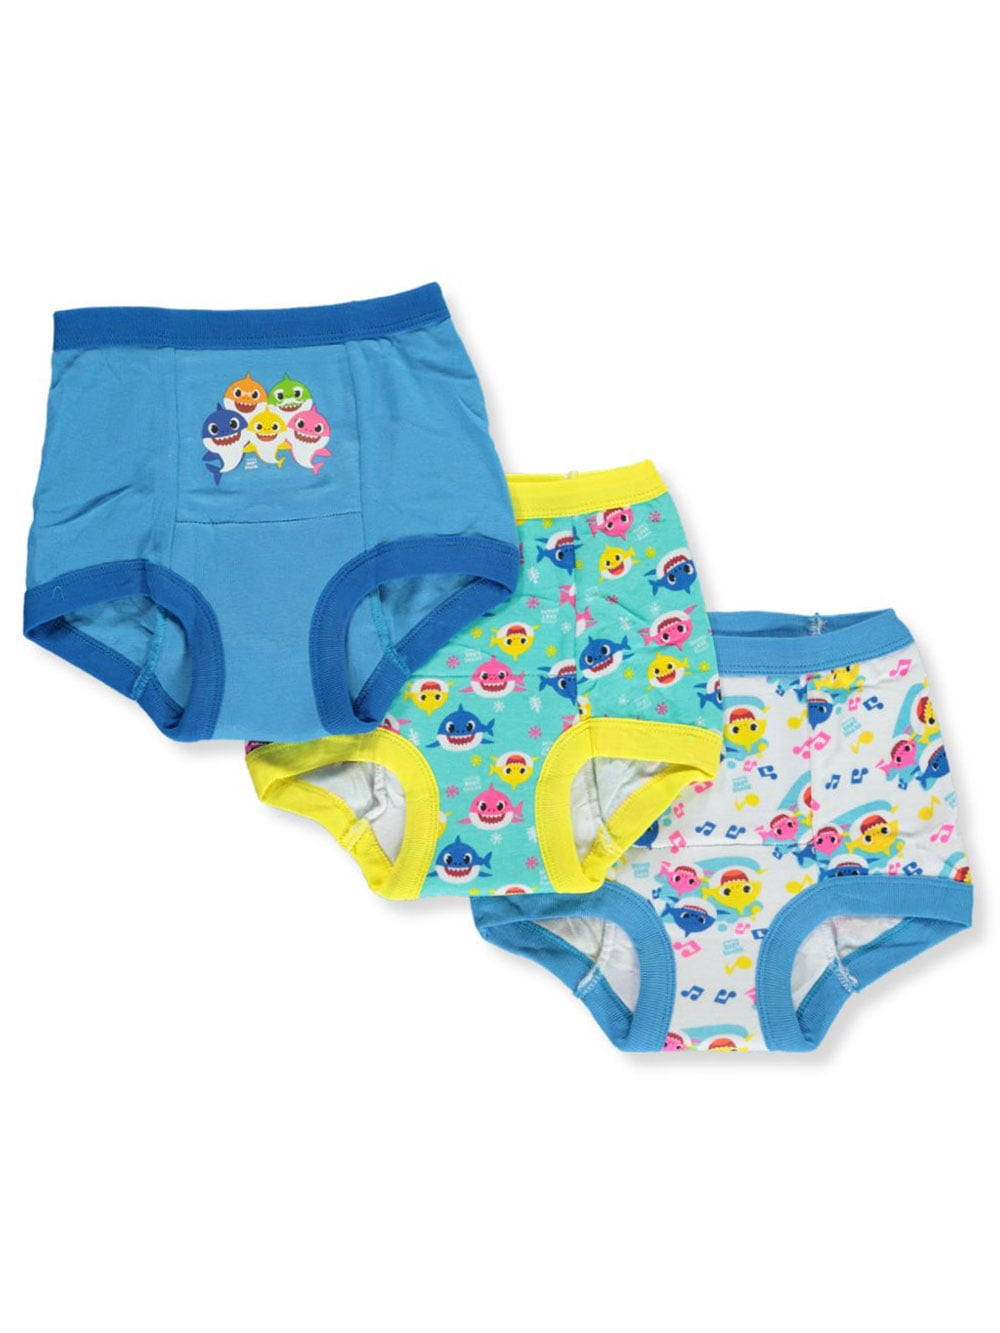 Baby Shark Boys' 3-Pack Training Pants & Chart Set - blue/multi